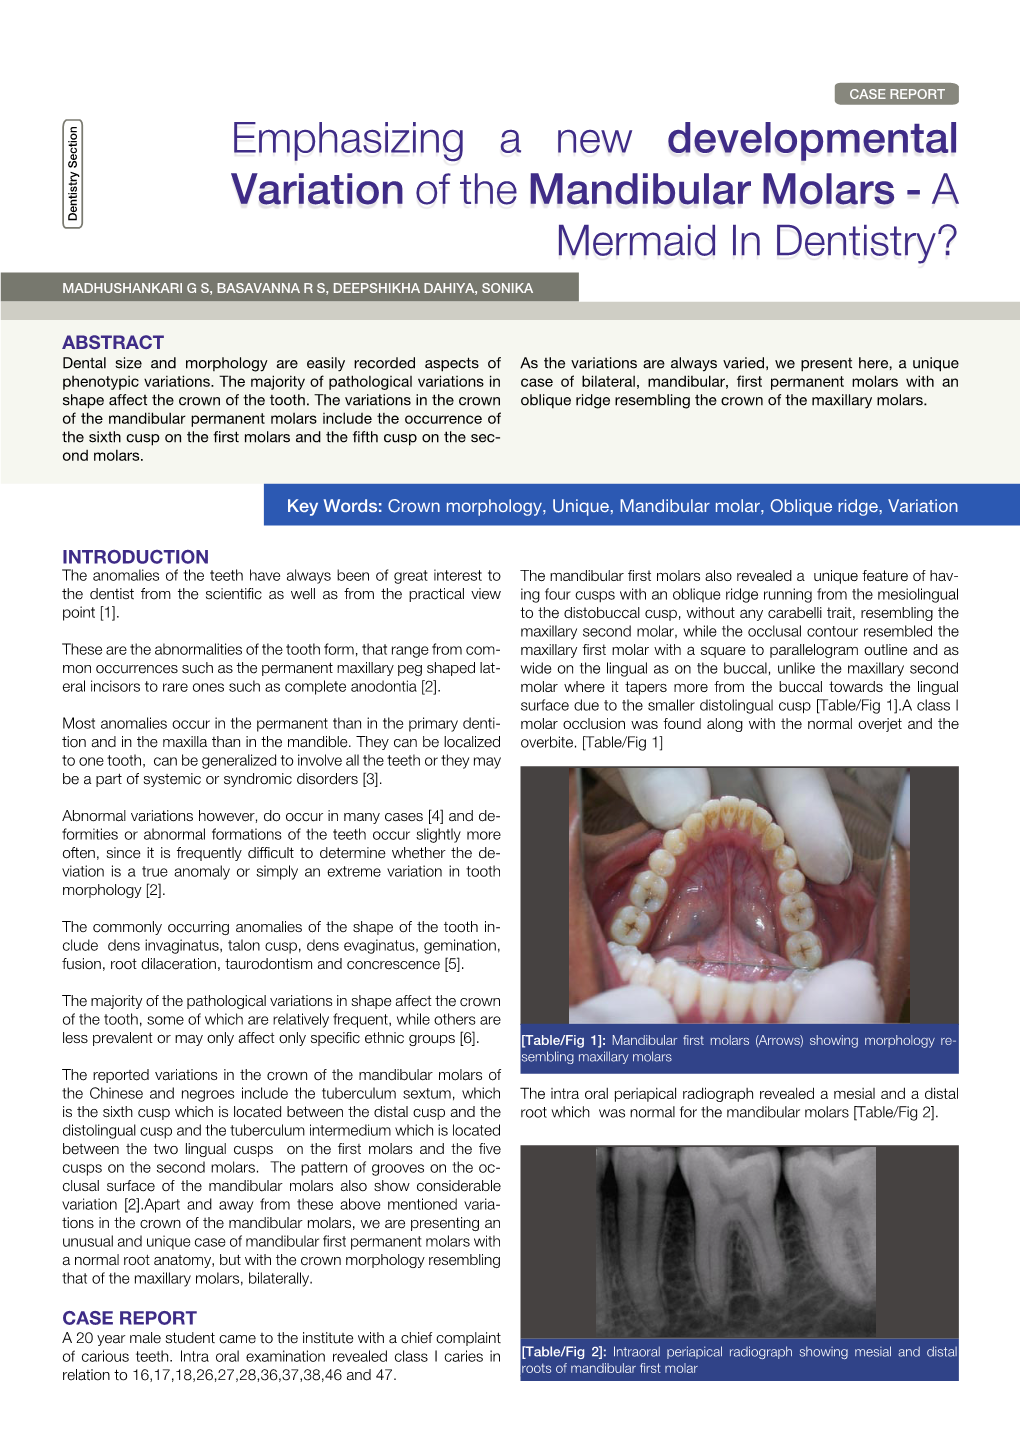 Emphasizing a New Developmental Variation of the Mandibular Molars - a Dentistry Section Mermaid in Dentistry?